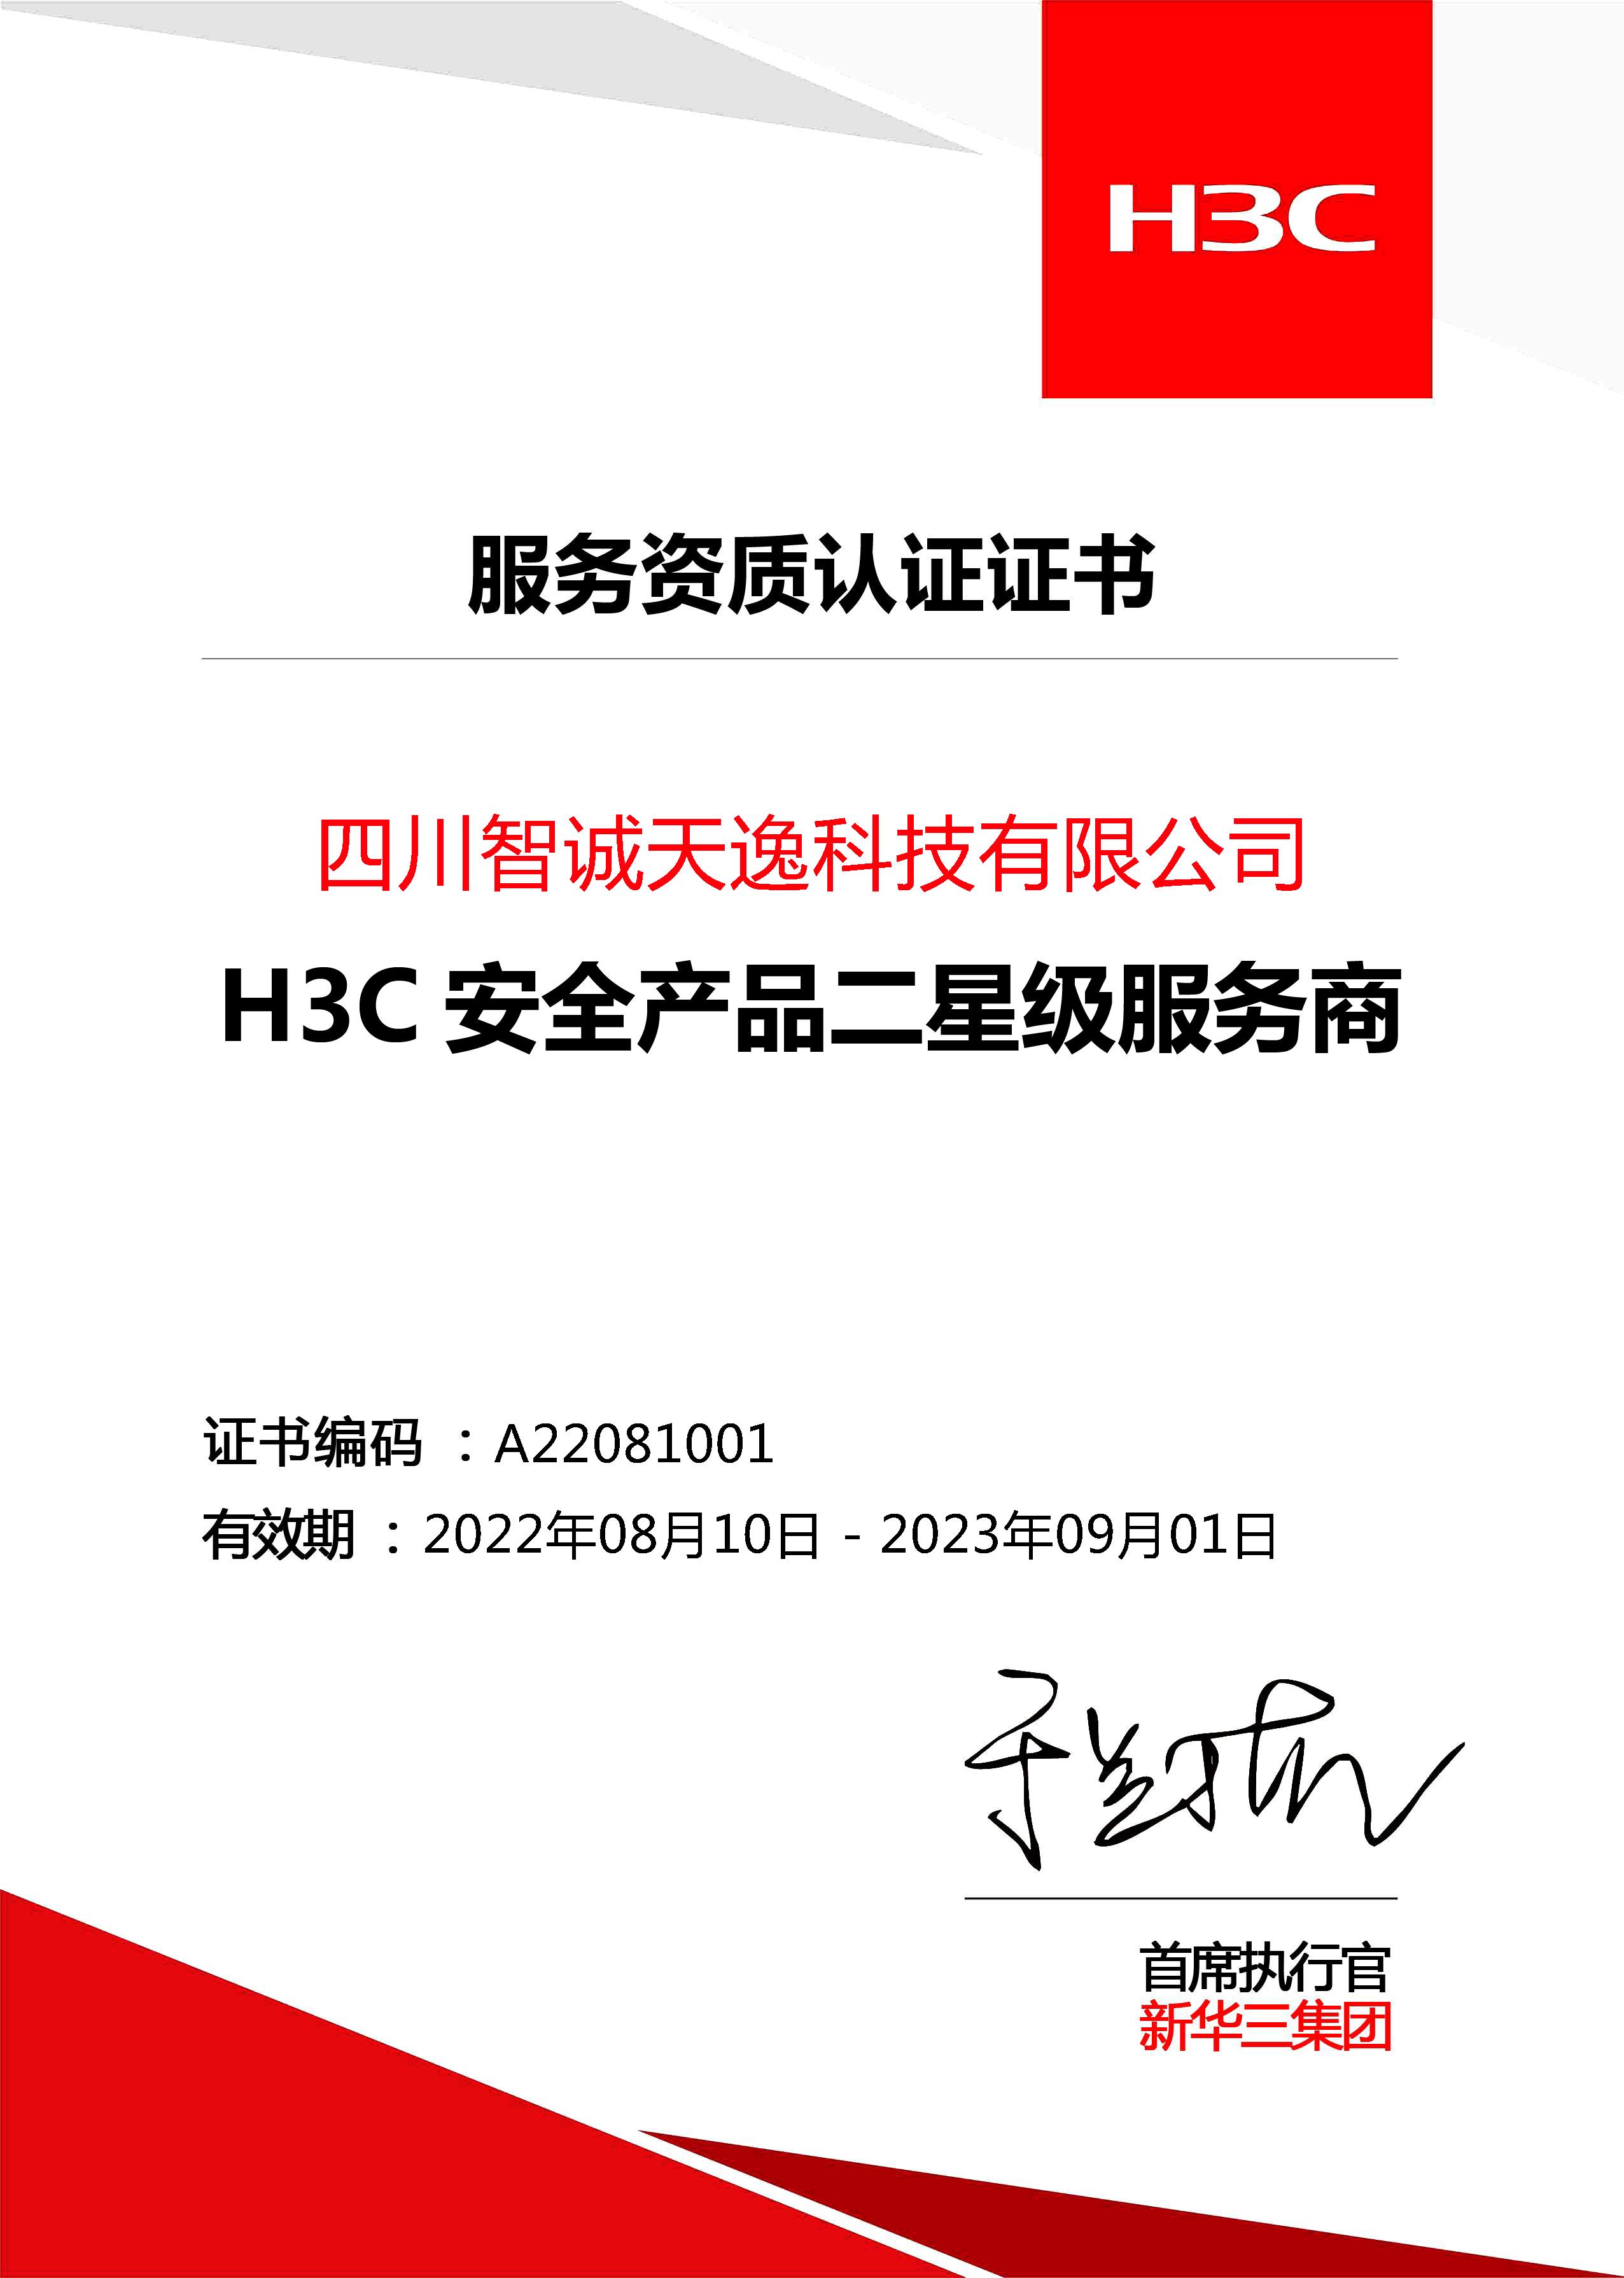 H3C安全二星级